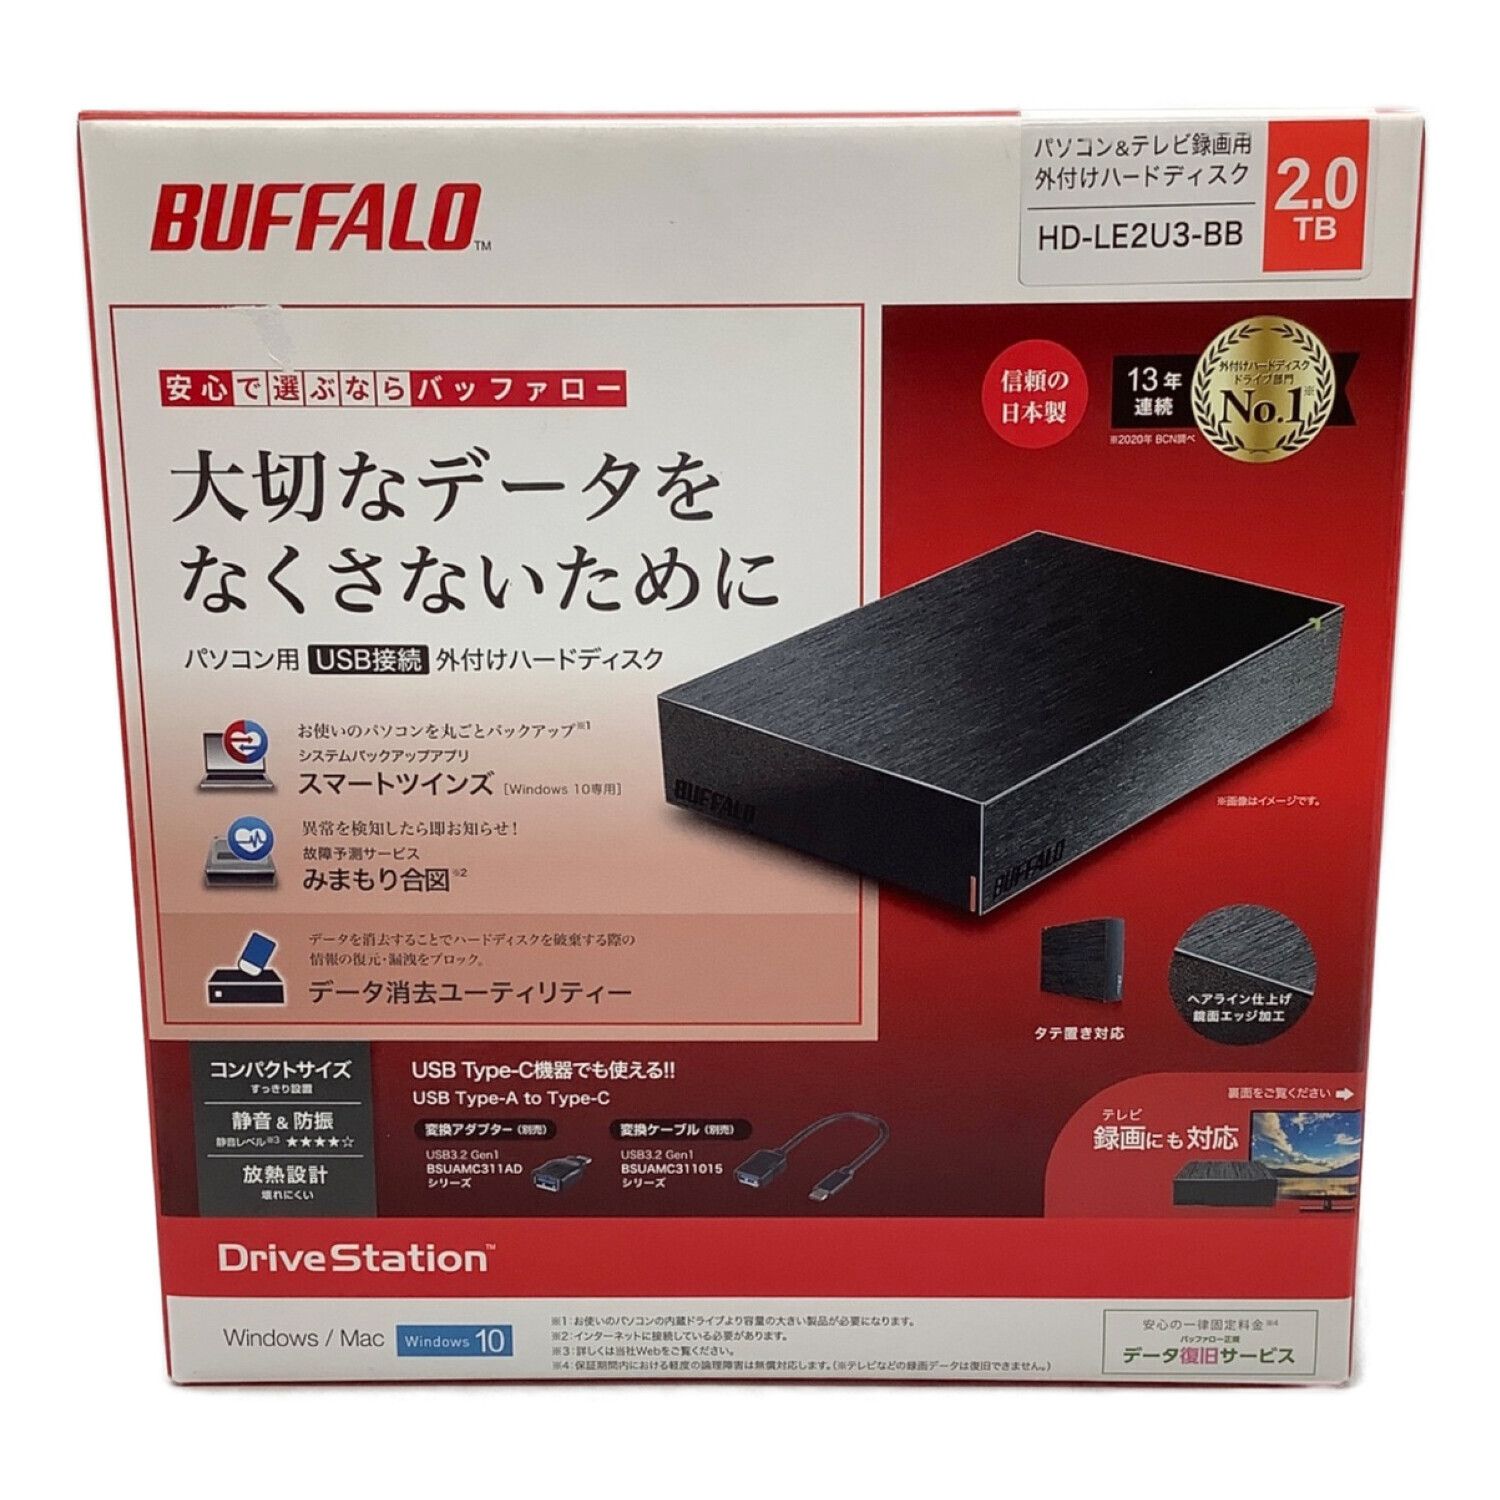 BUFFALO HD-LE2U3-BB BLACK